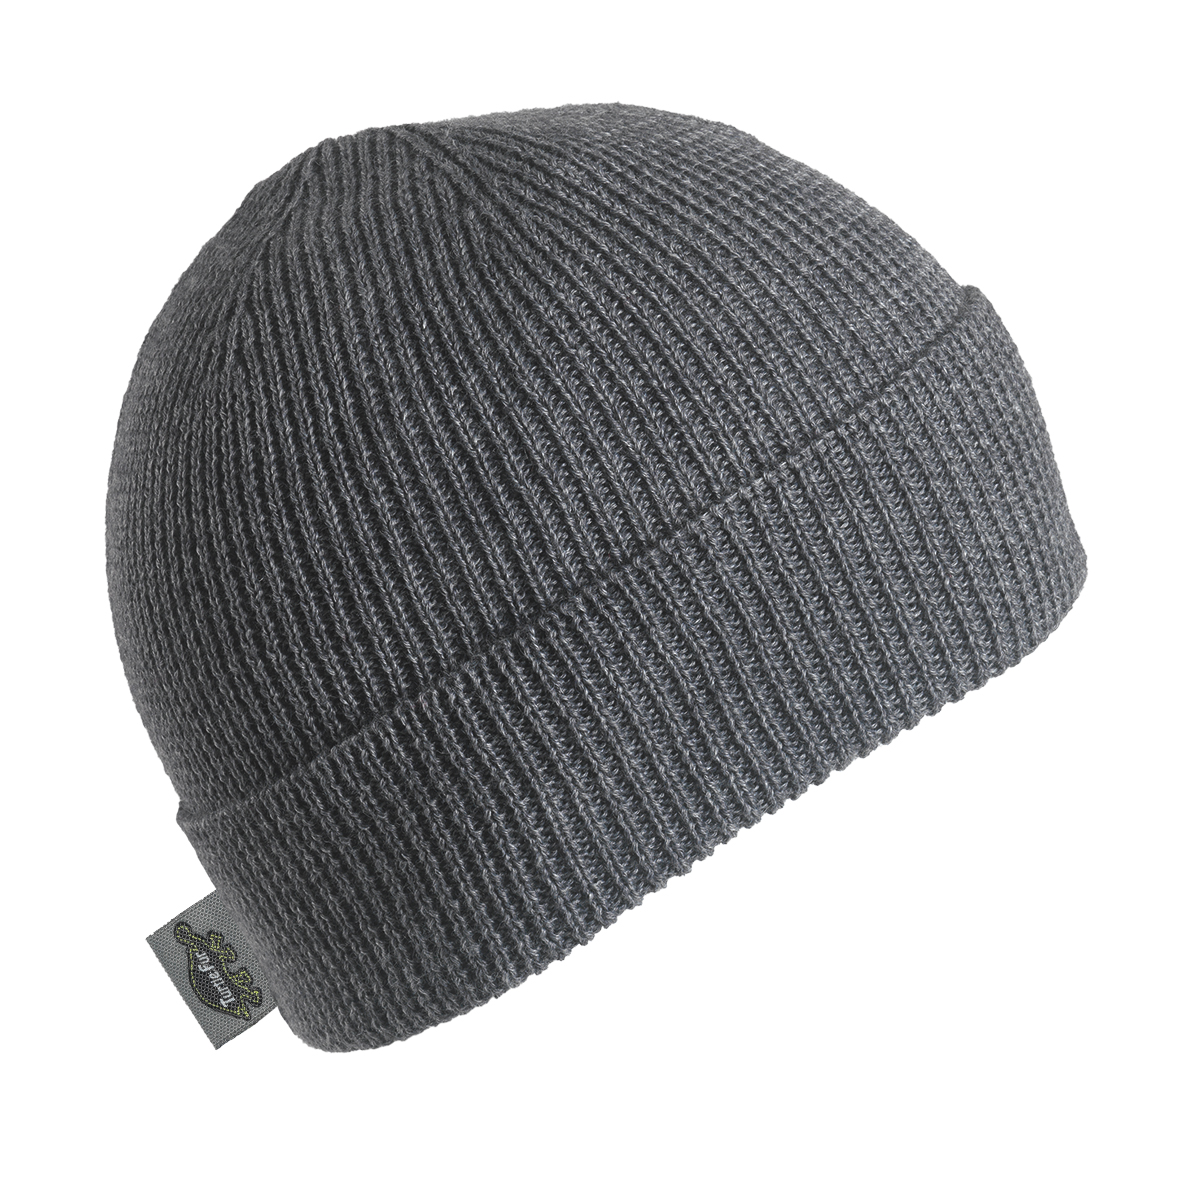 Turtle Fur - Men's Watchcap, Lightweight Merino Wool Knit Watch Cap | eBay